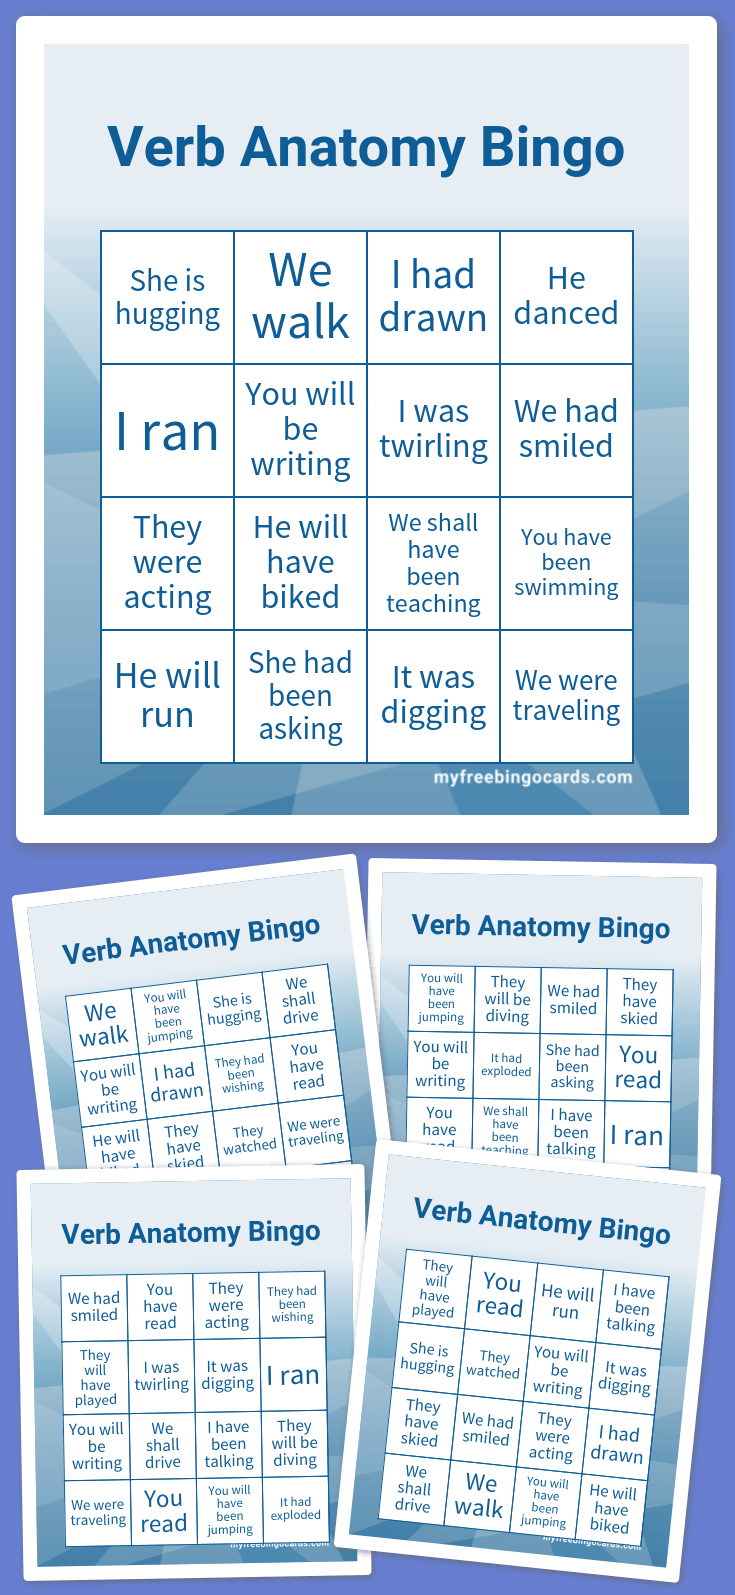 Verb Anatomy Bingo Card